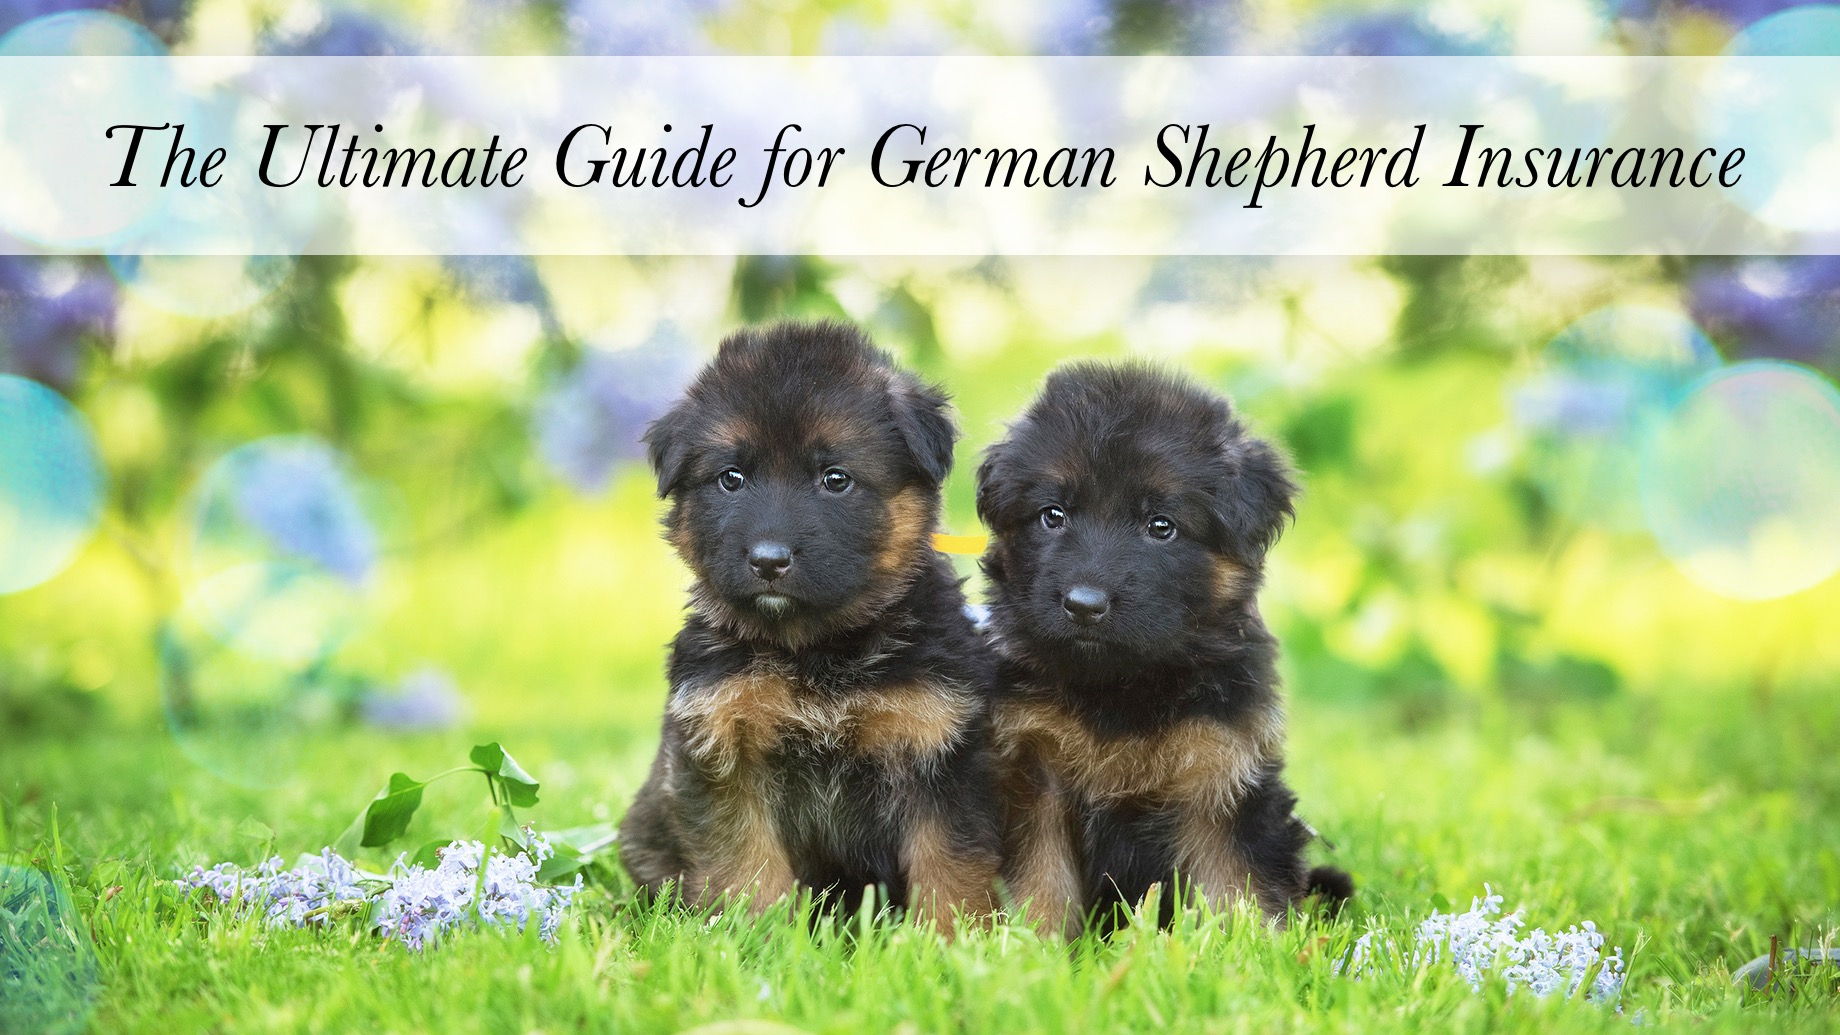 German Shepherd Insurance - The Ultimate Guide